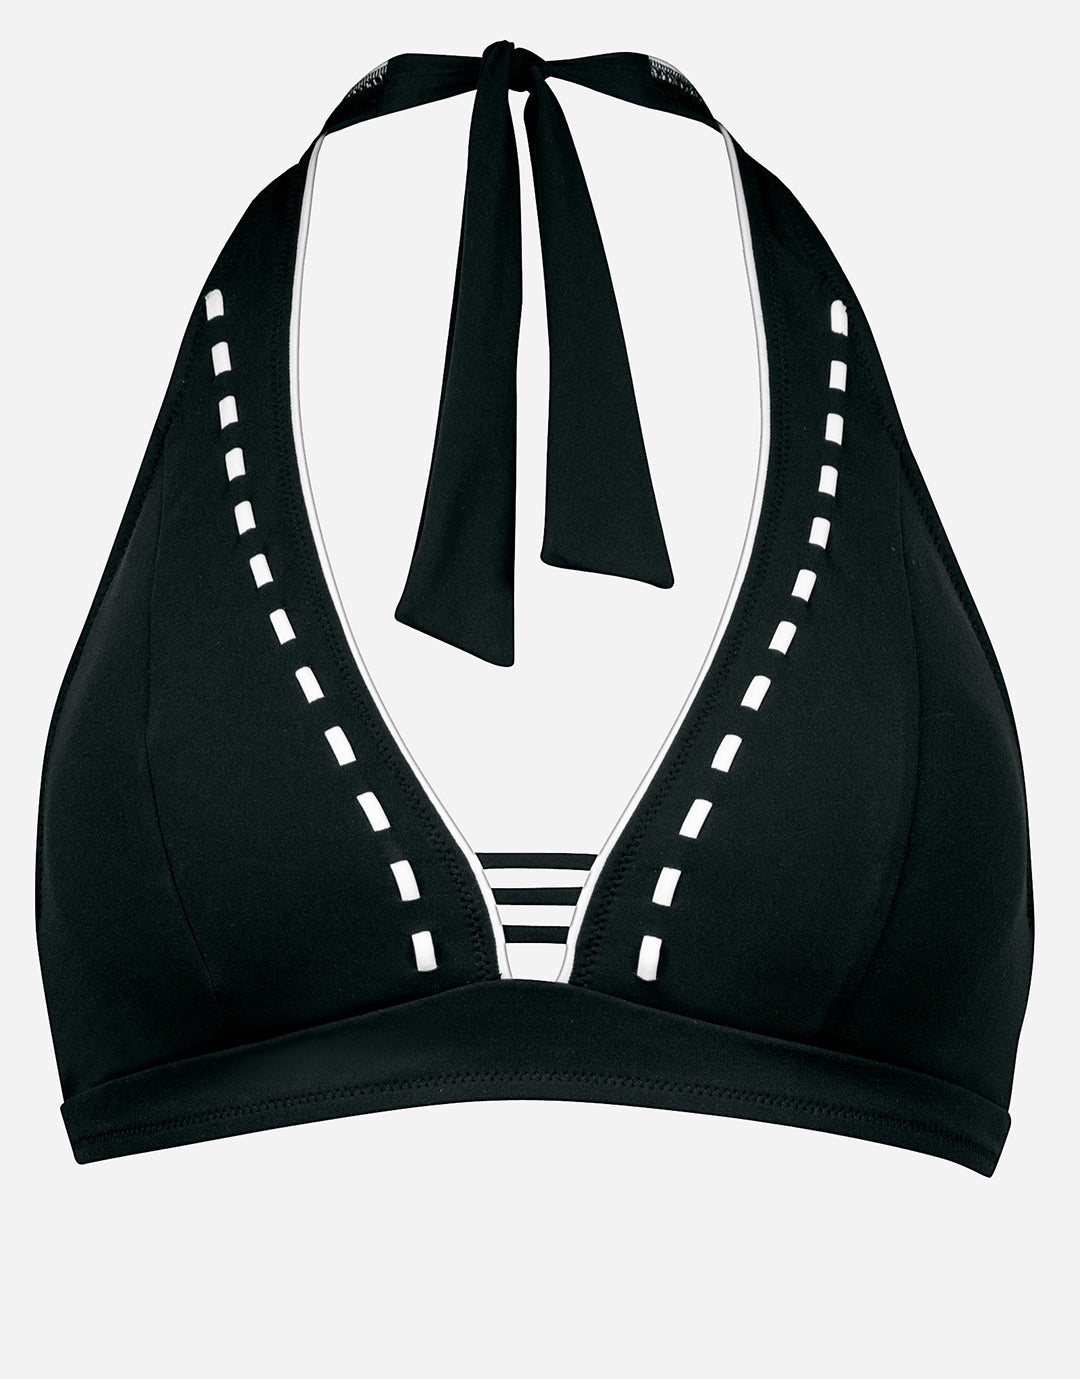 Marine Mindset Halter Bikini Top - Black and White - Simply Beach UK